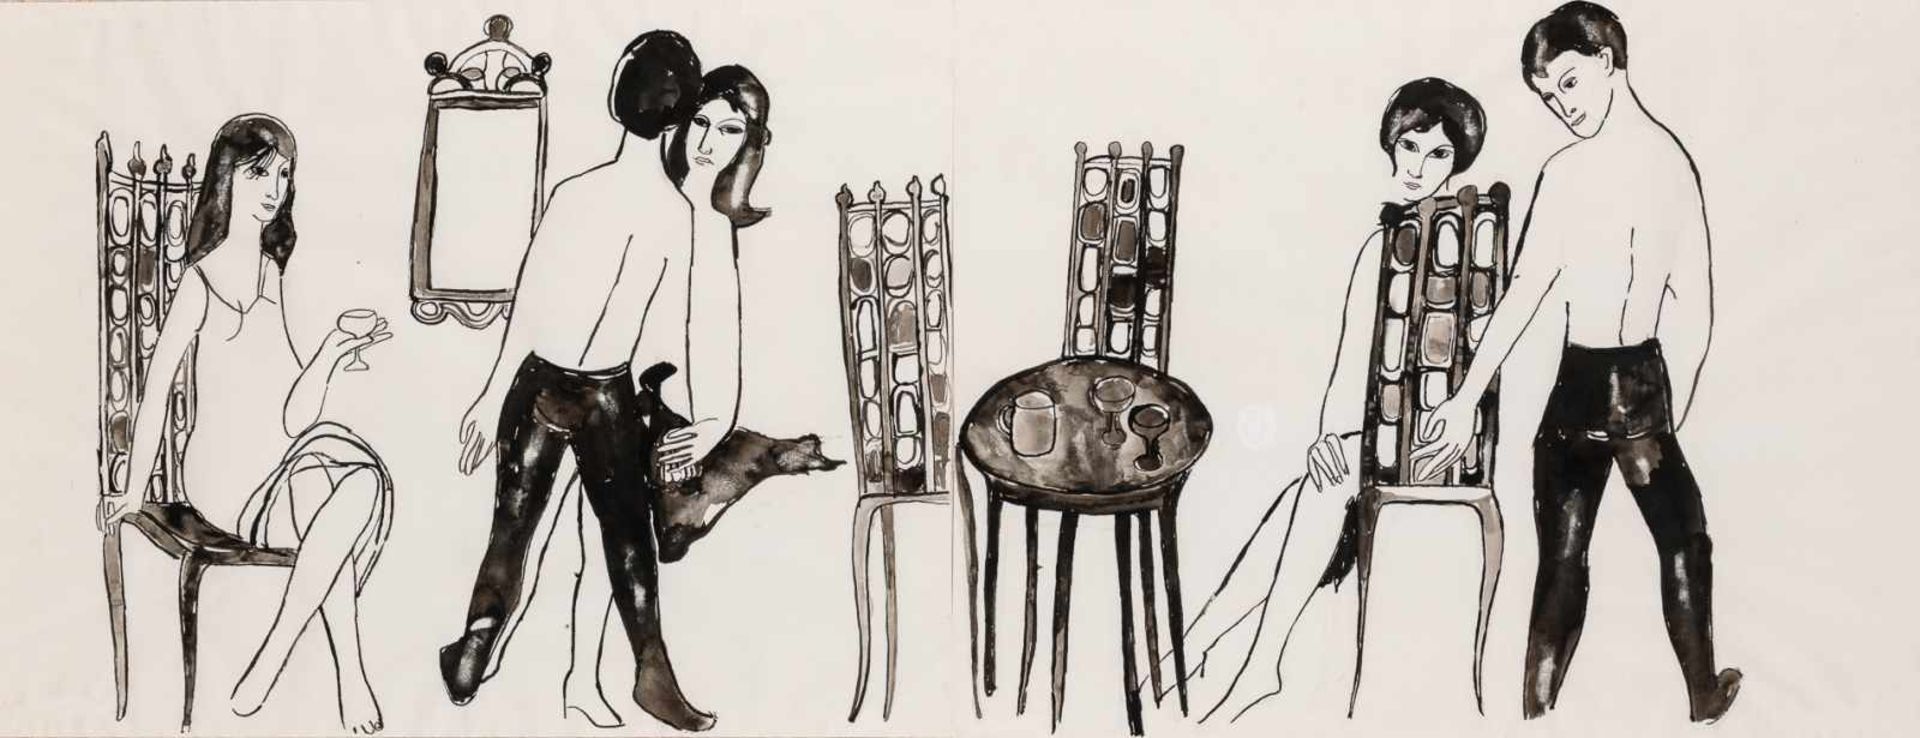 Lotte Profohs (hs art) Wien 1934 - 2012 Wien Verführung (Diptychon) Tusche auf Papier / india ink on